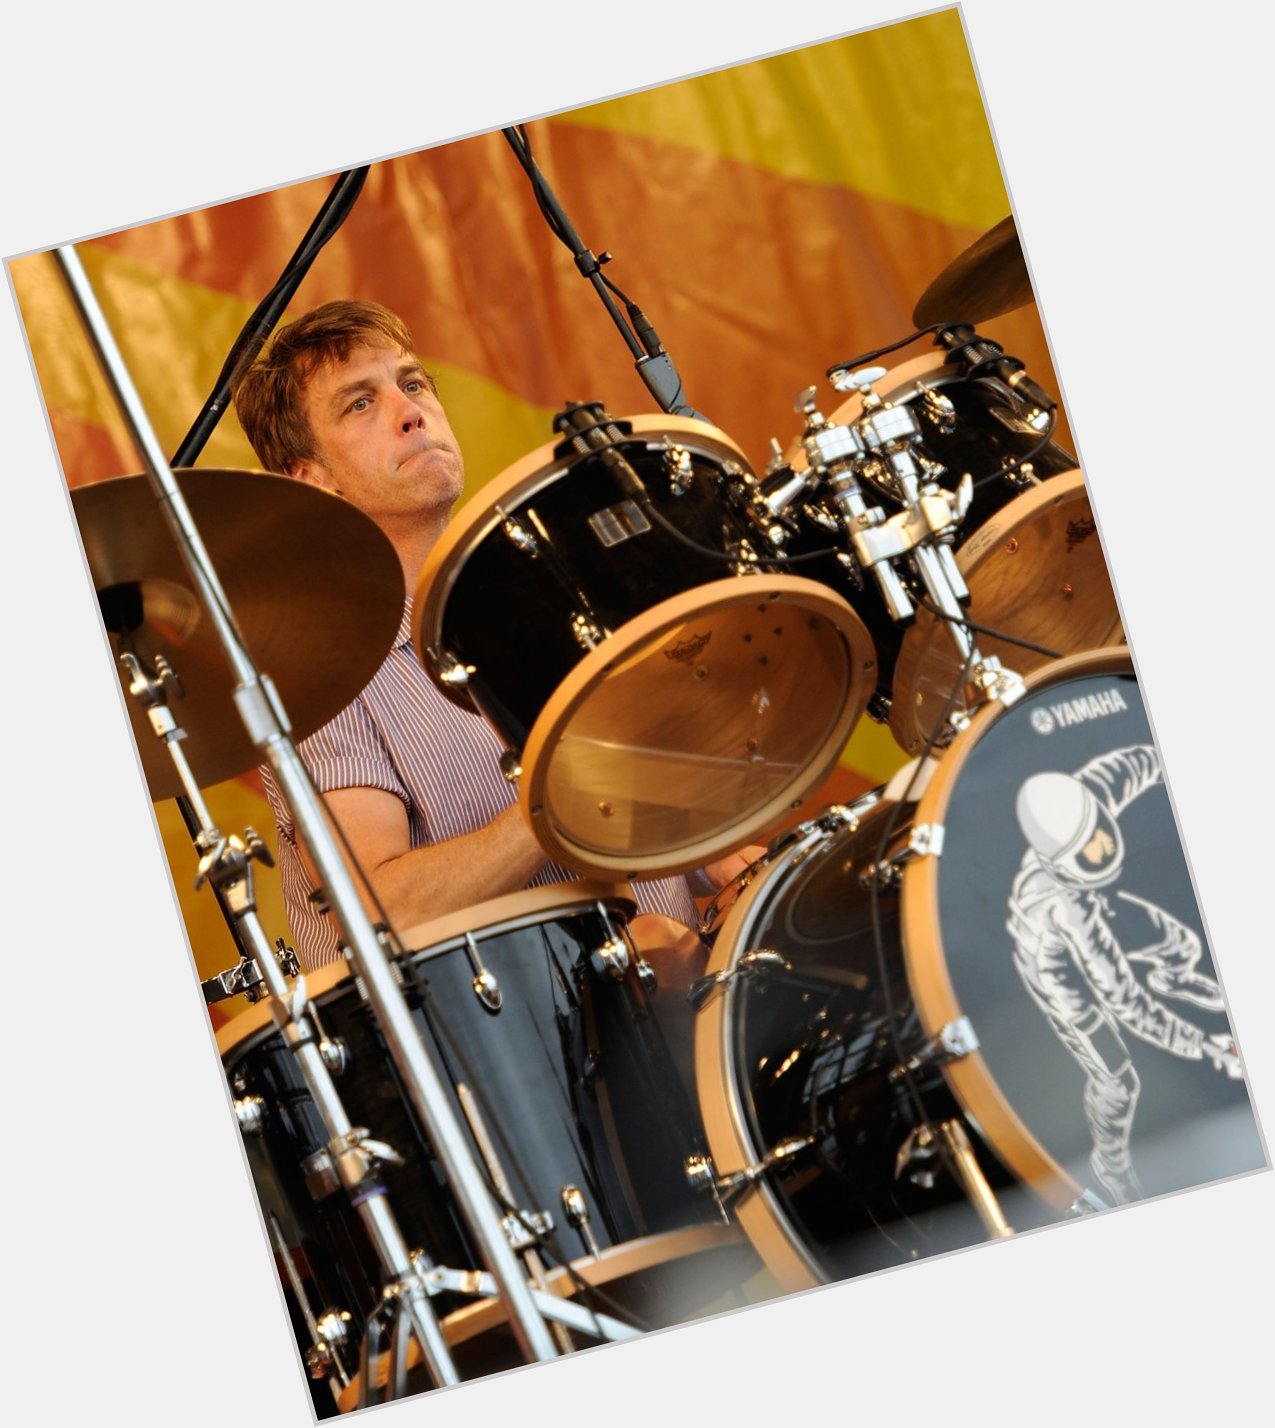 Happy 57th birthday to drummer Matt Cameron! : Rick Diamond/Getty Images 